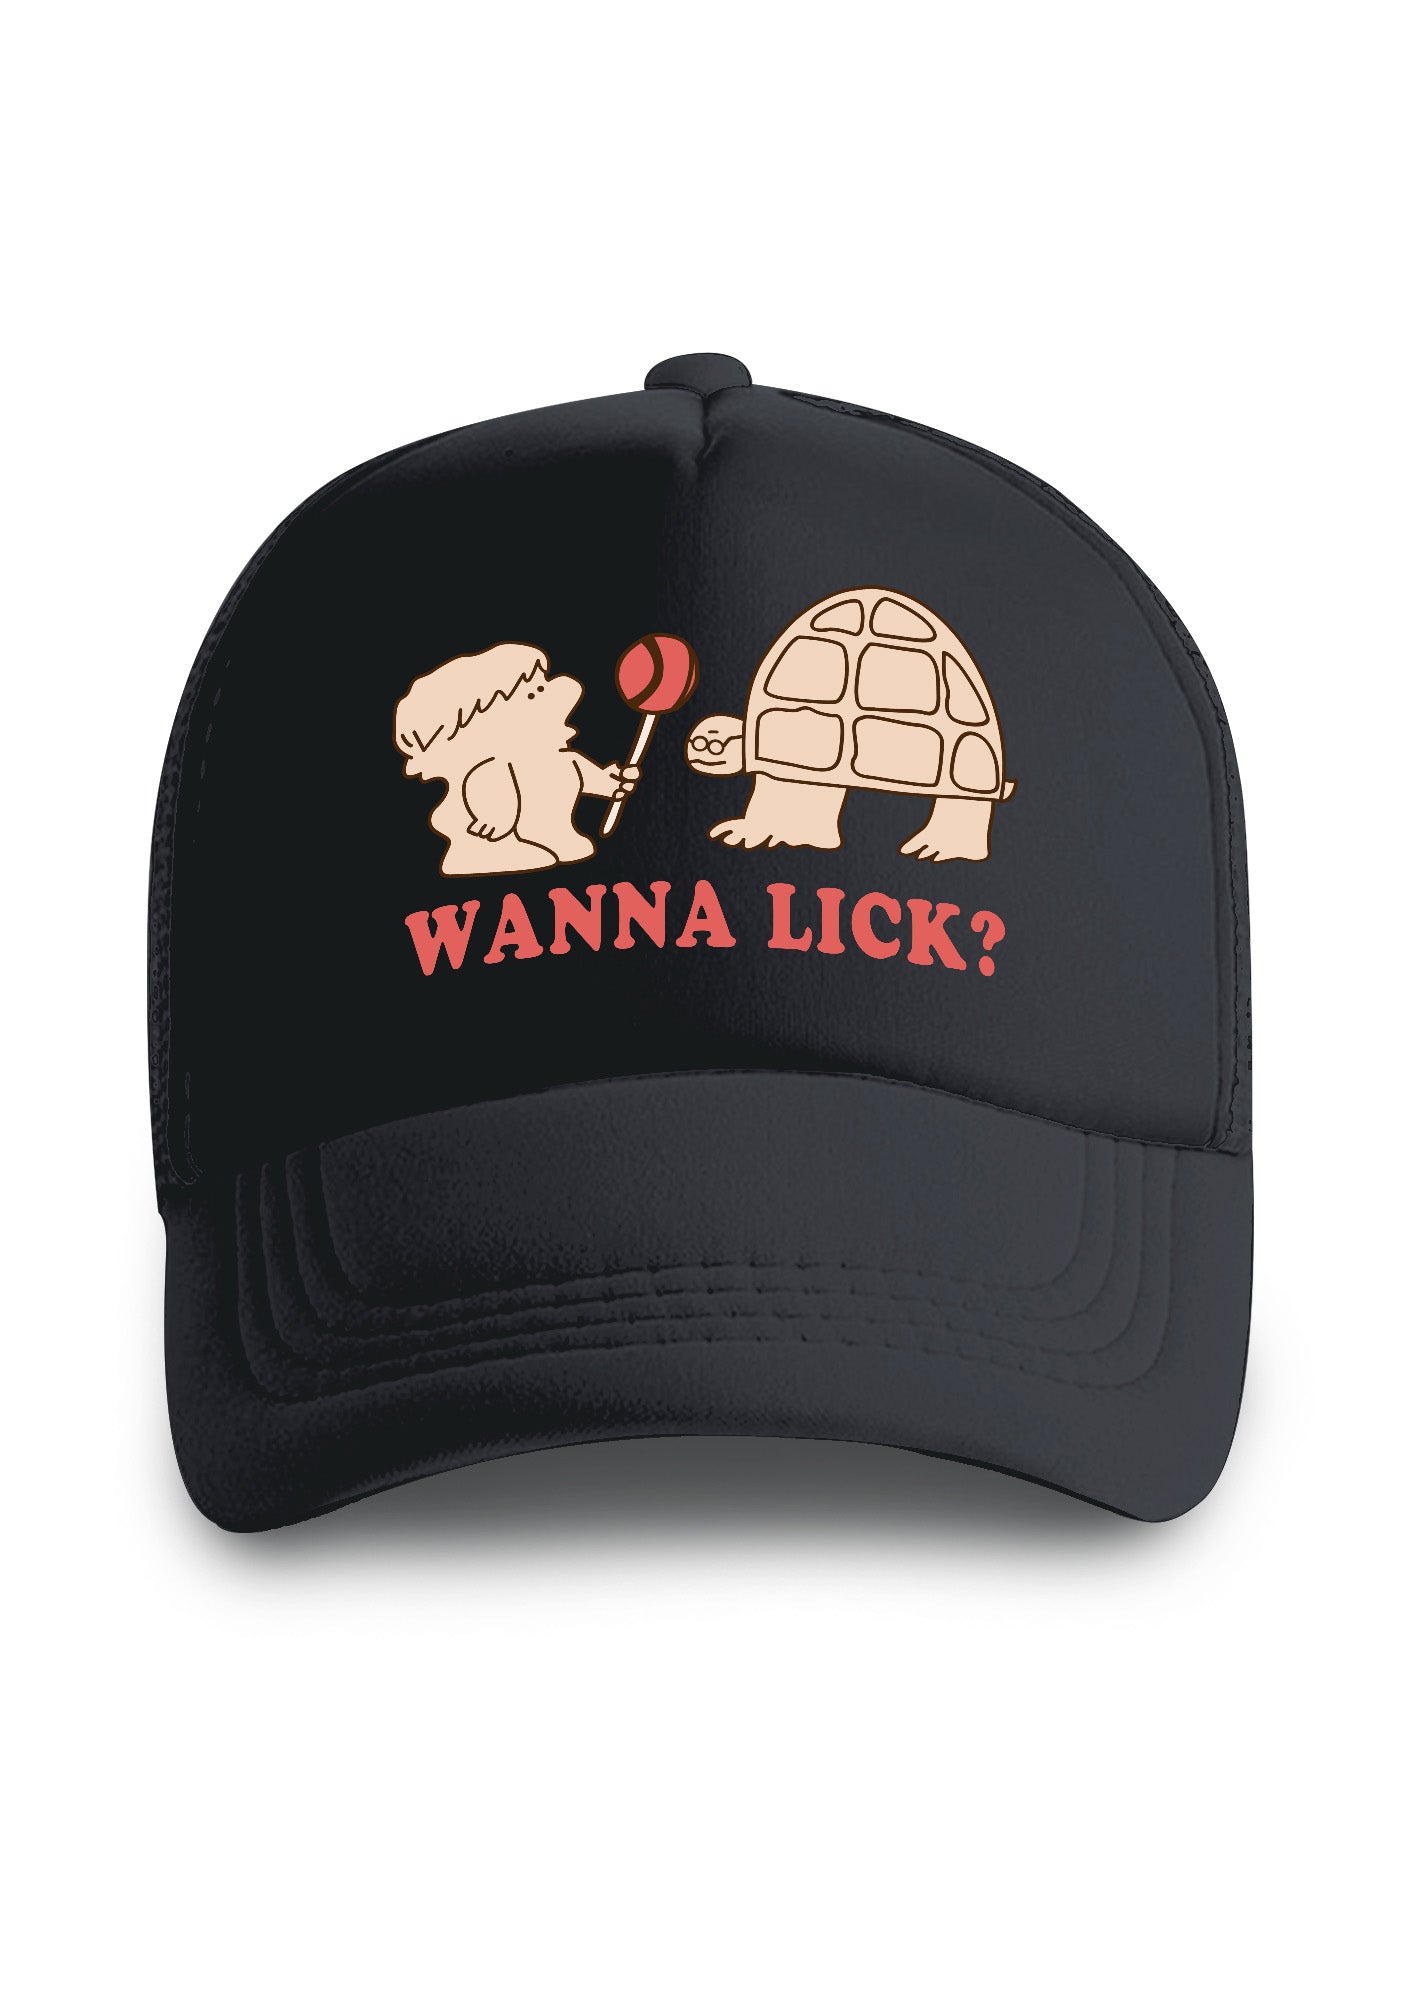 Wanna Lick Lollipop Trucker Hat